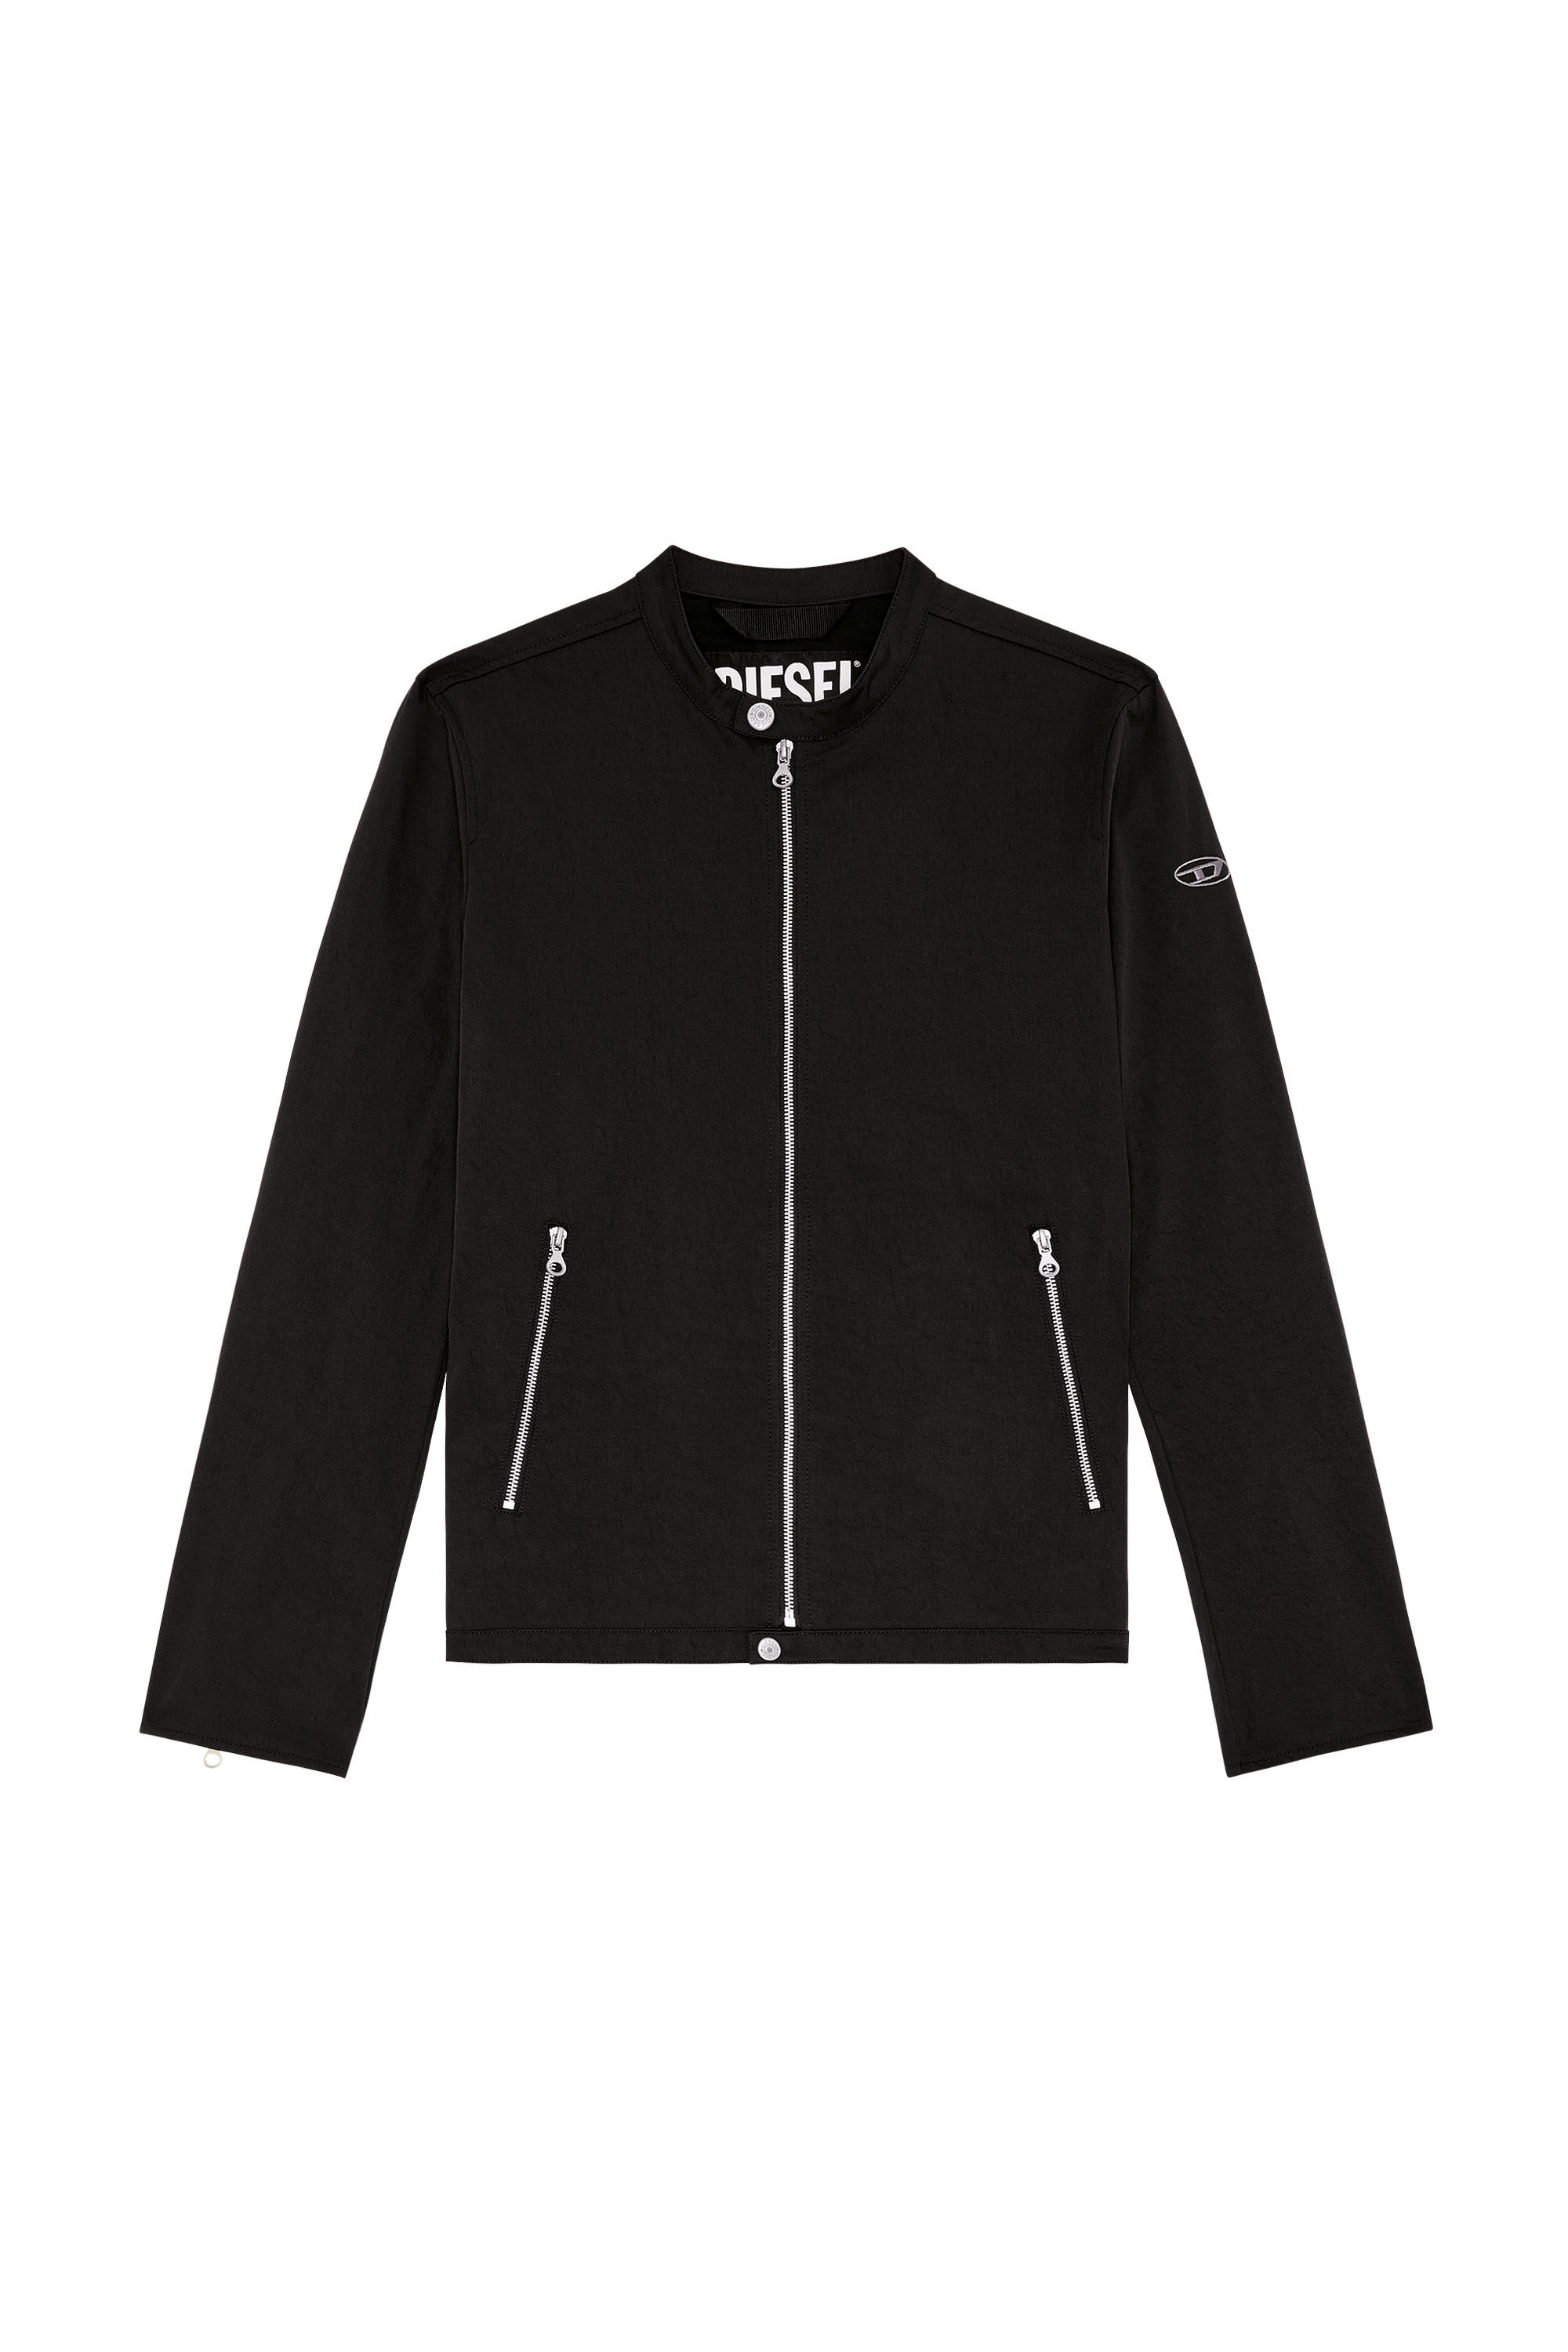 Diesel - J-GLORY-NW, Man Biker jacket in cotton-touch nylon in Black - Image 2